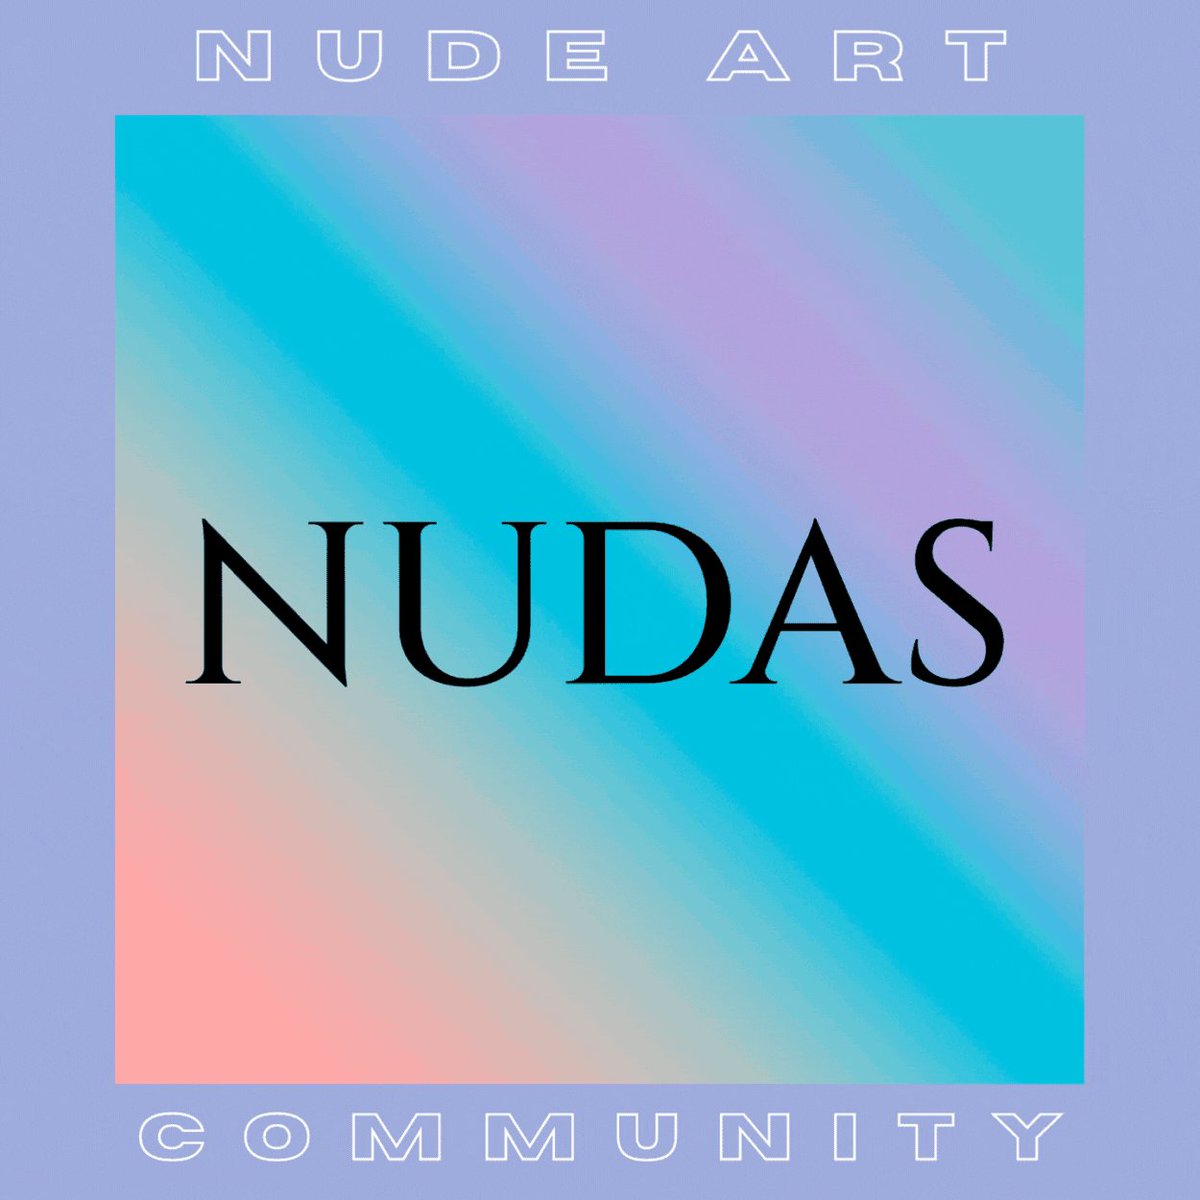 Nudas Art Nude Art Community Nft On Twitter Rt Edwingarcia